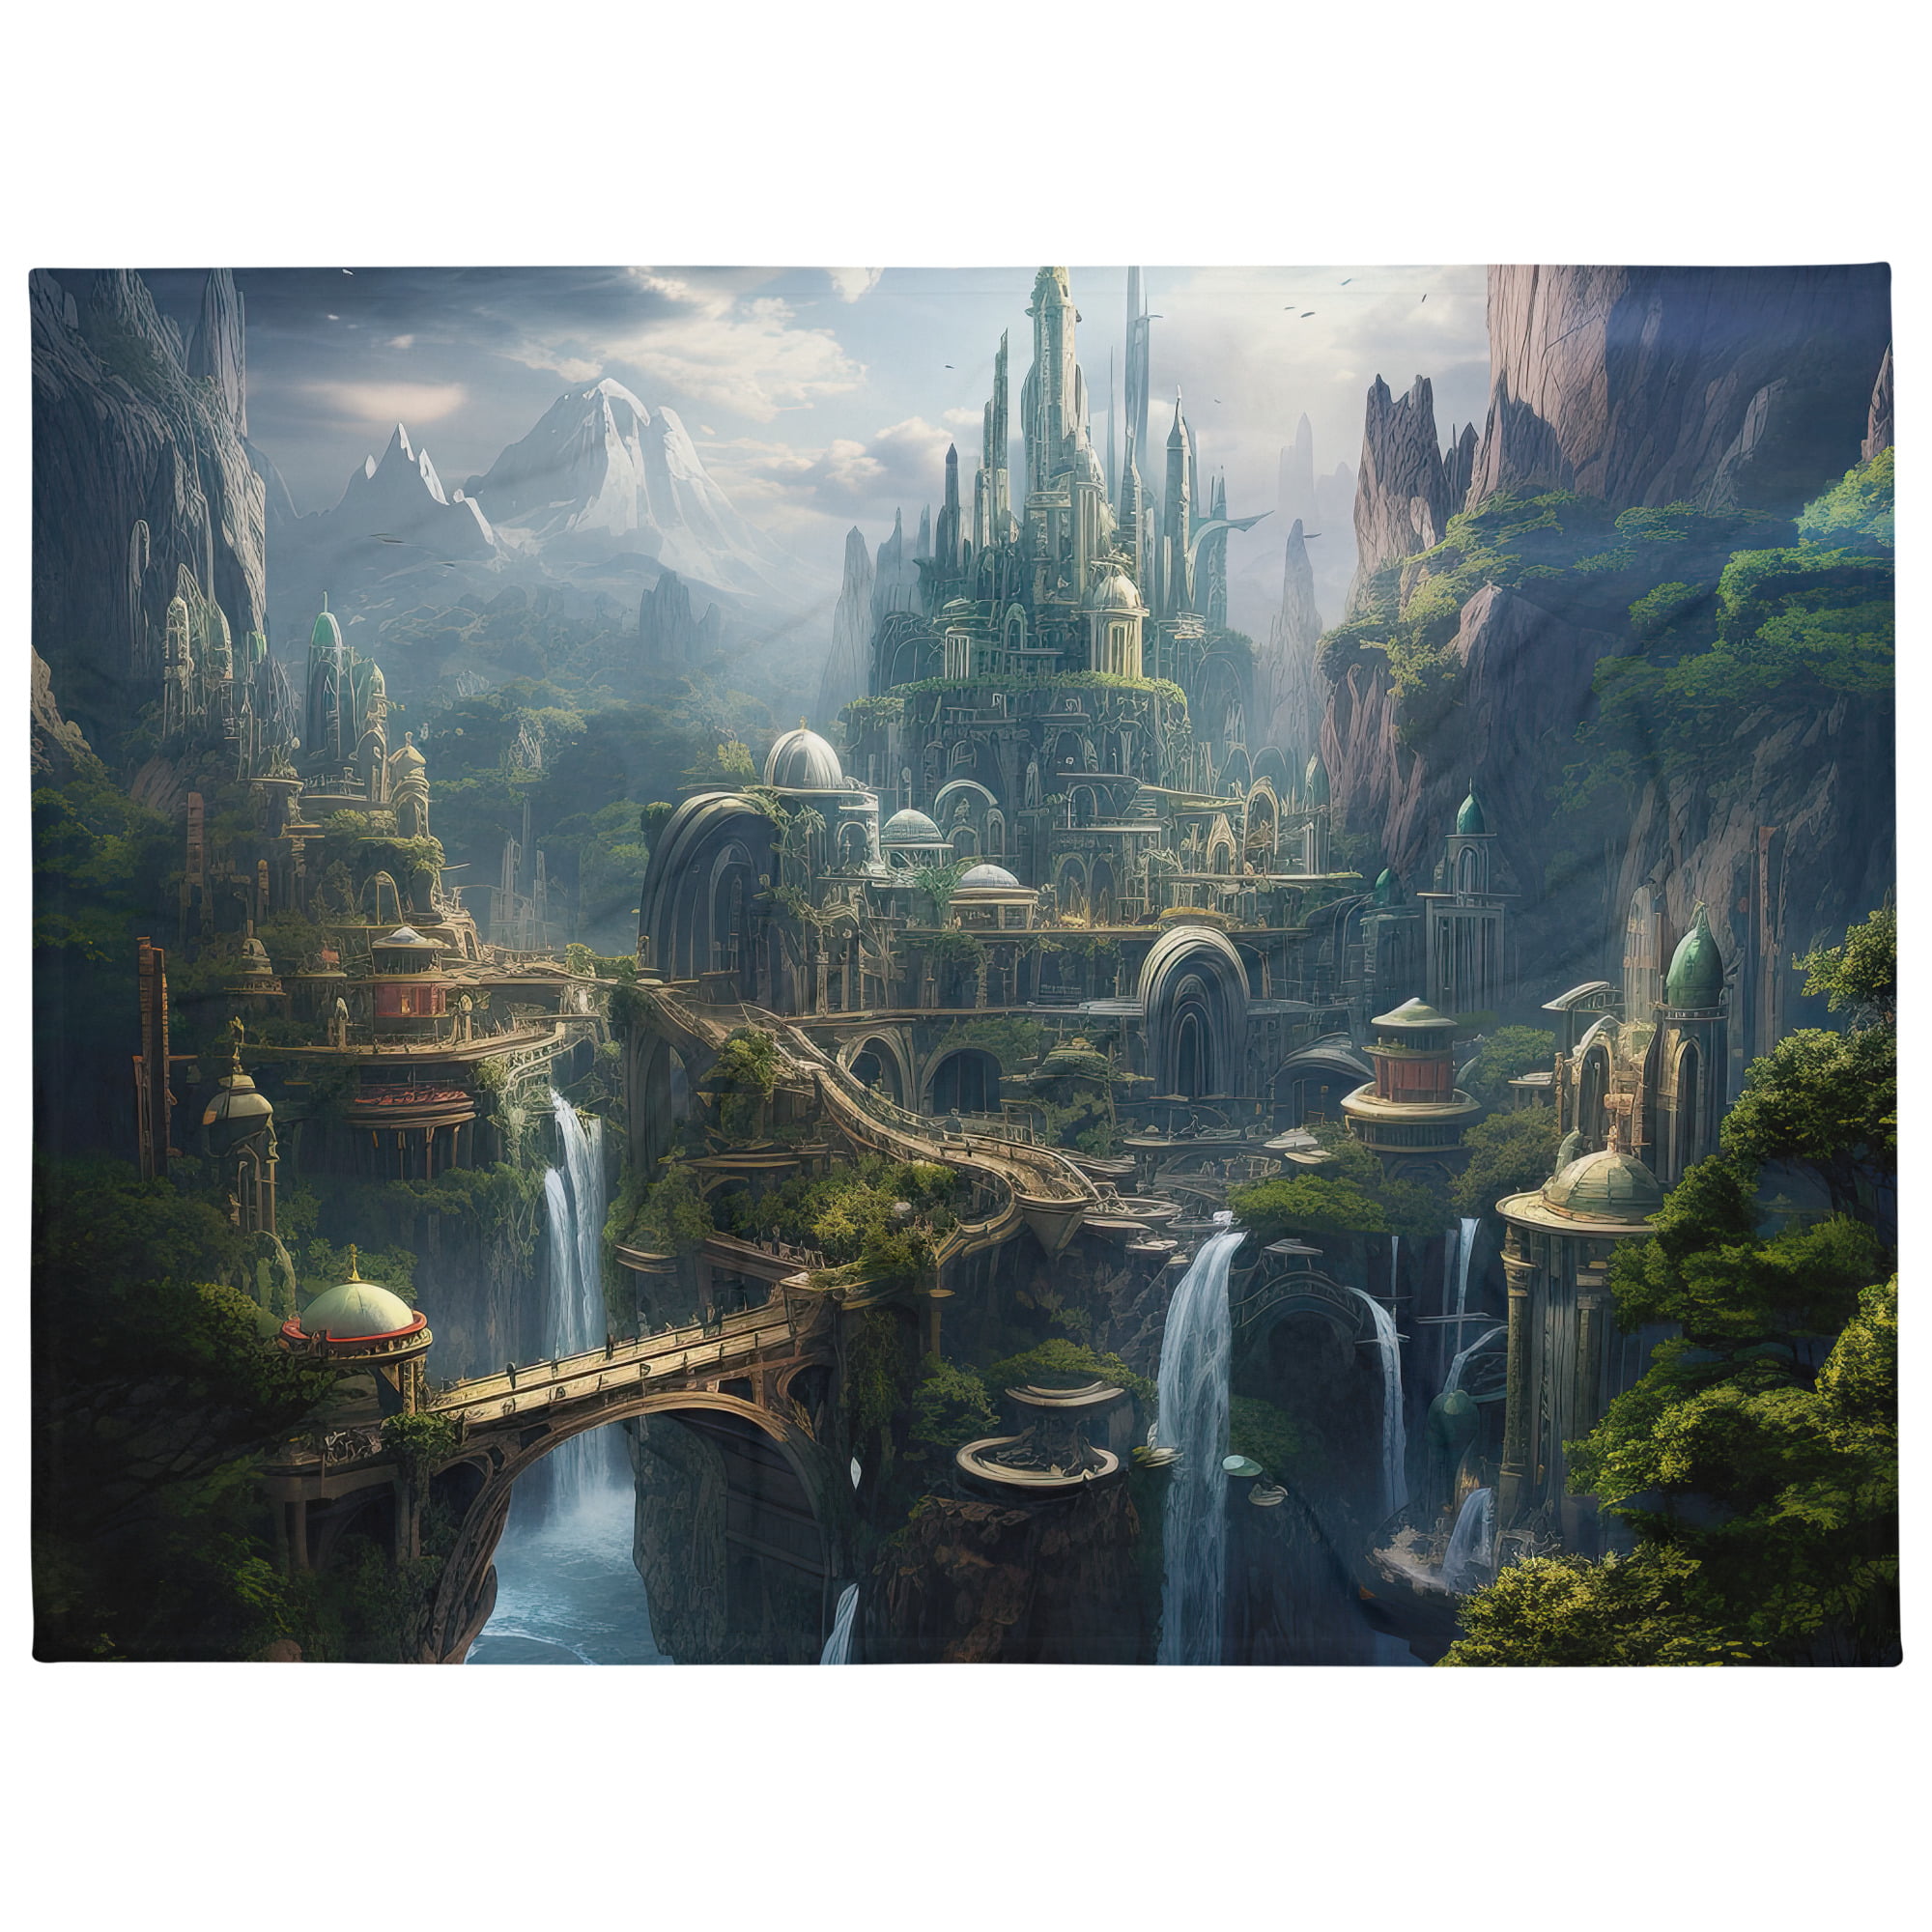 Elven Kingdom Fantasy Throw Blanket – 60×80